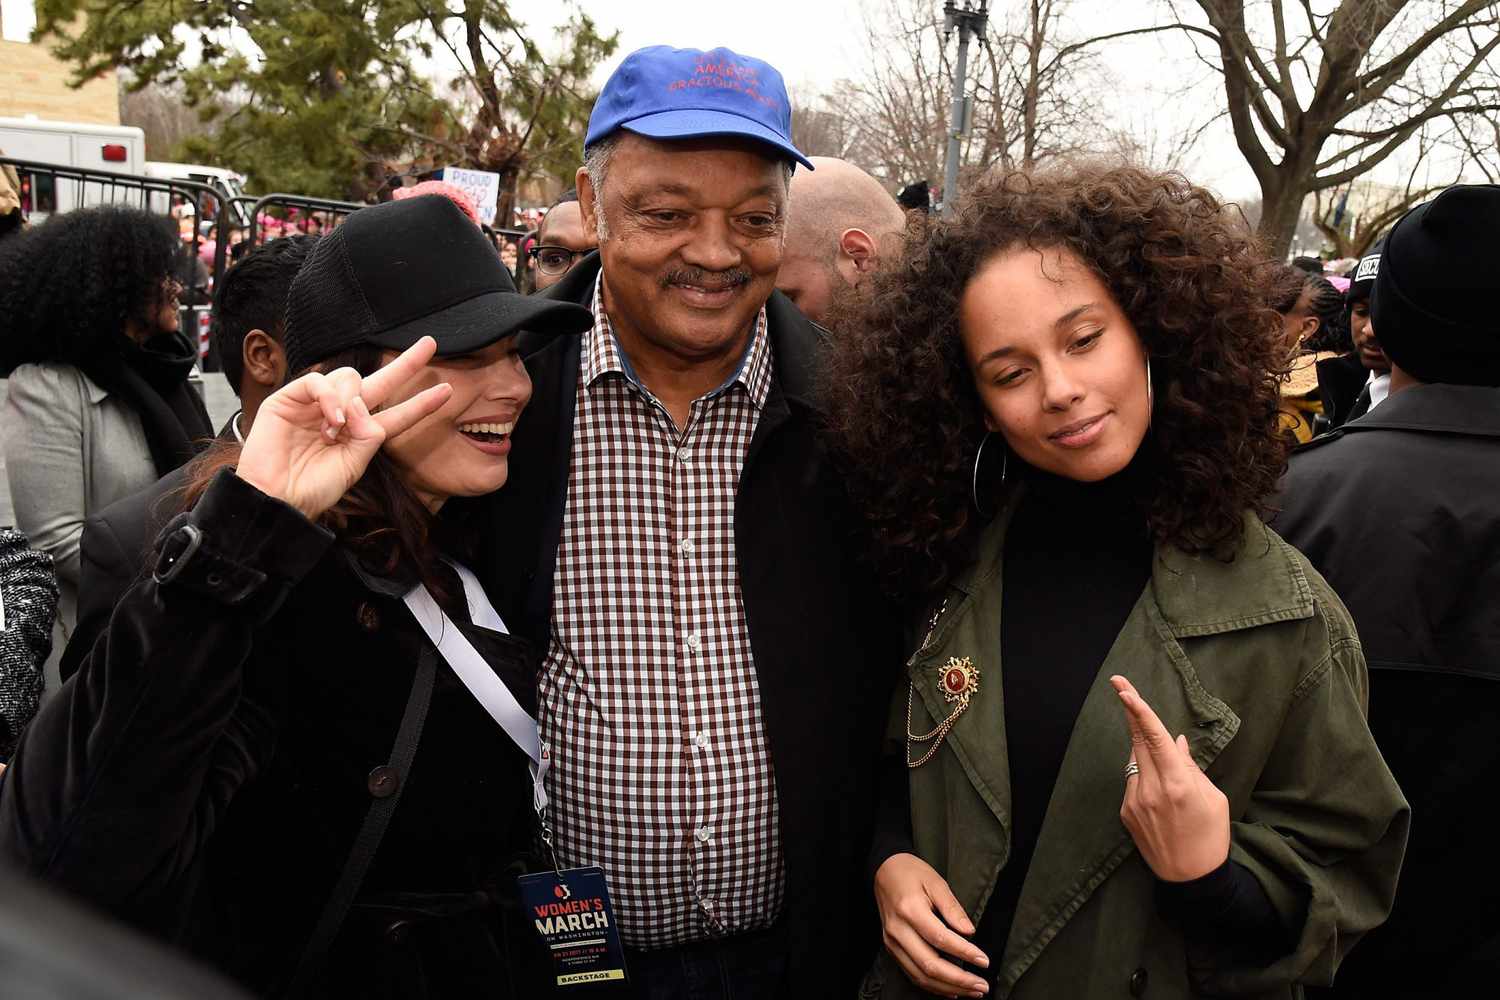 Fran Drescher, Jesse Jackson, and Alicia Keys&nbsp;at the Women's March on Washington